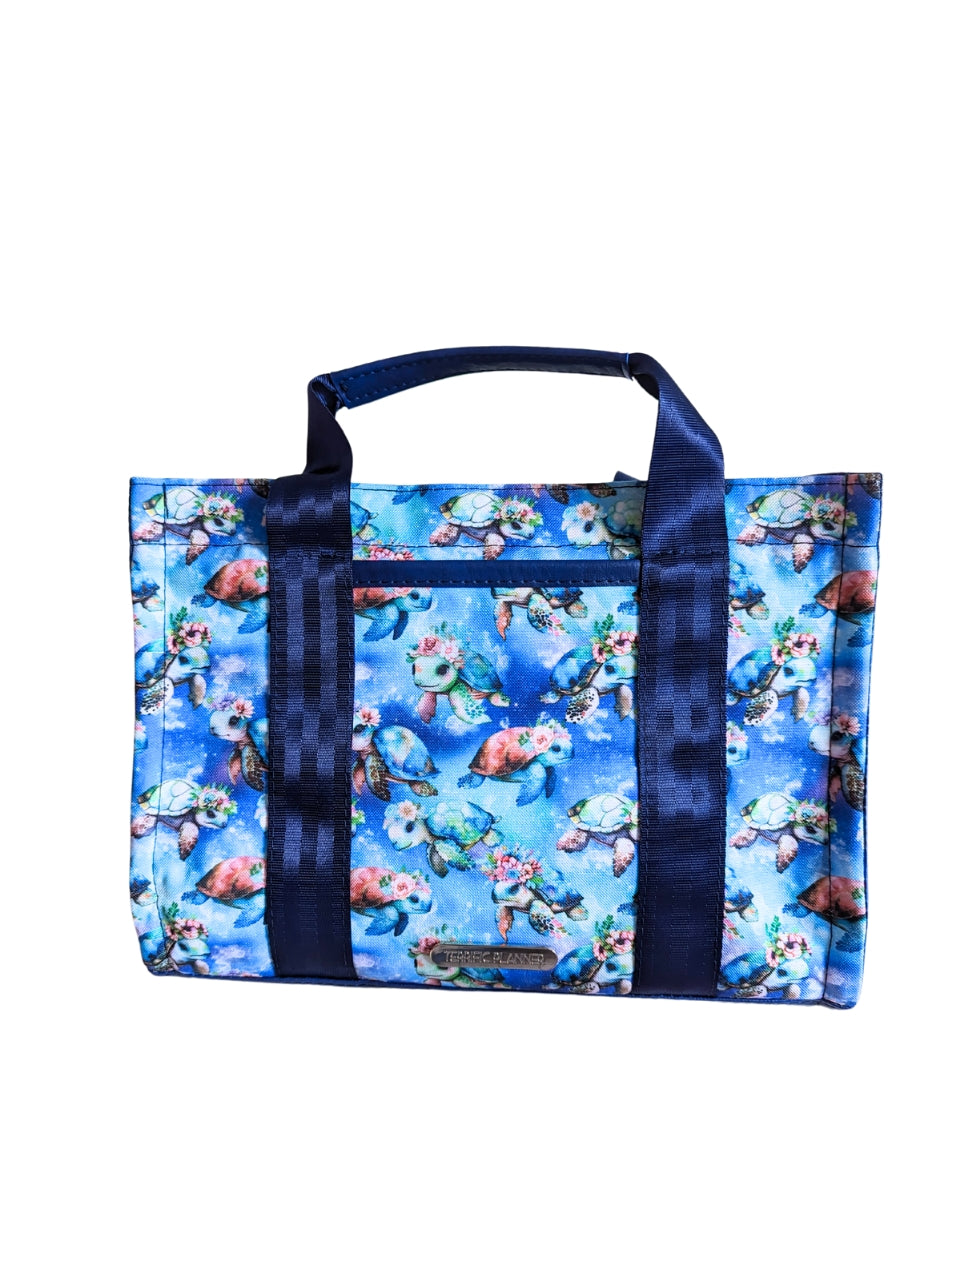 Sea Turtles Transponster Tote Bag / Handbag (Medium)